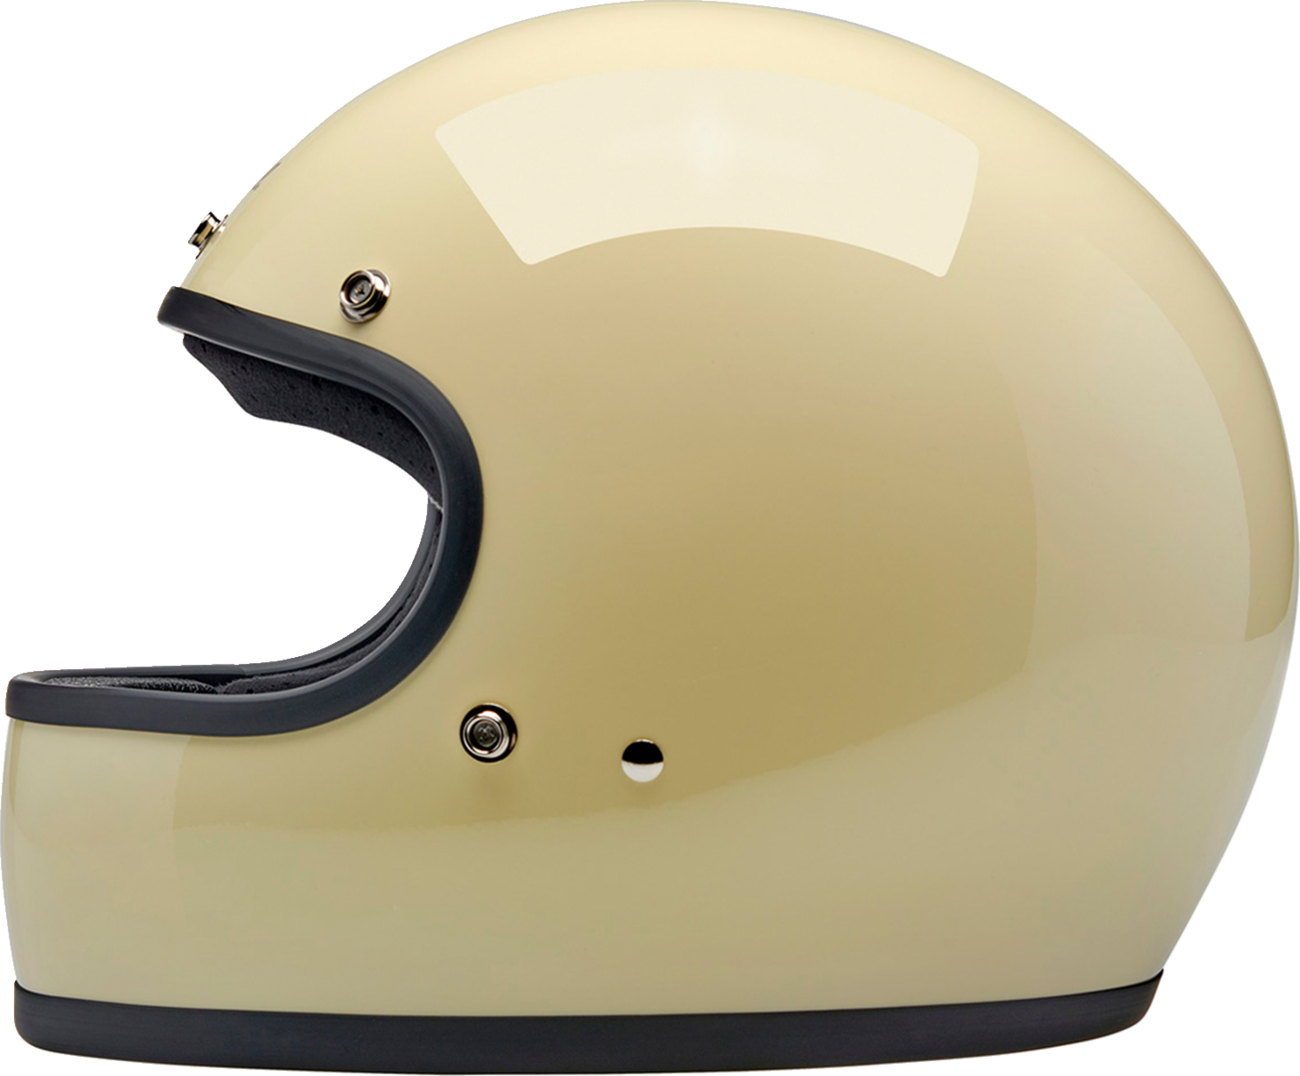 BILTWELL Gringo Helmet - Gloss White - Medium 1002-102-503